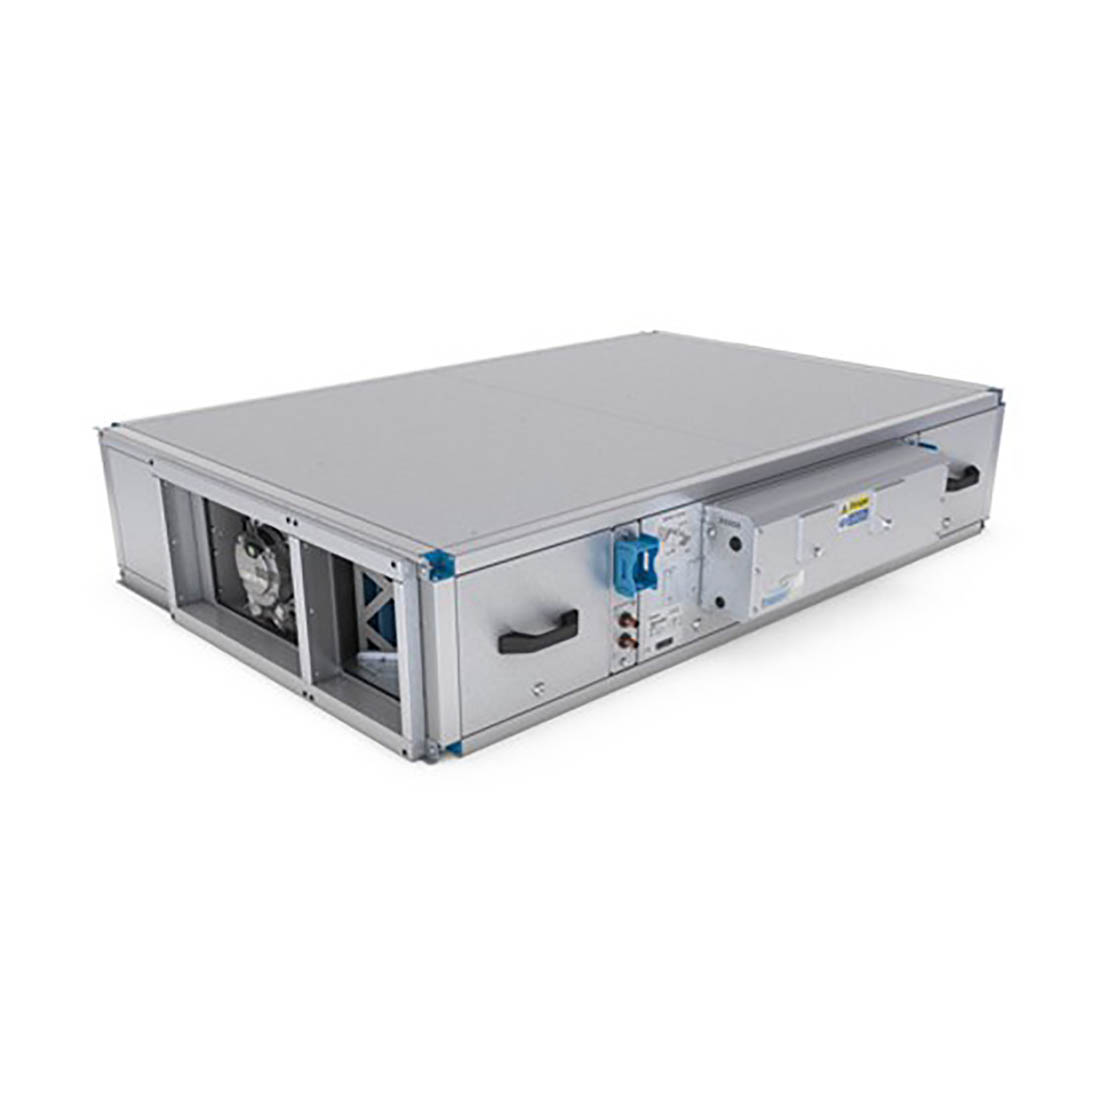 Nuaire Xboxer XBC-10 Commercial Heat Exchange Unit - (Price Varies Upon Appraisal)